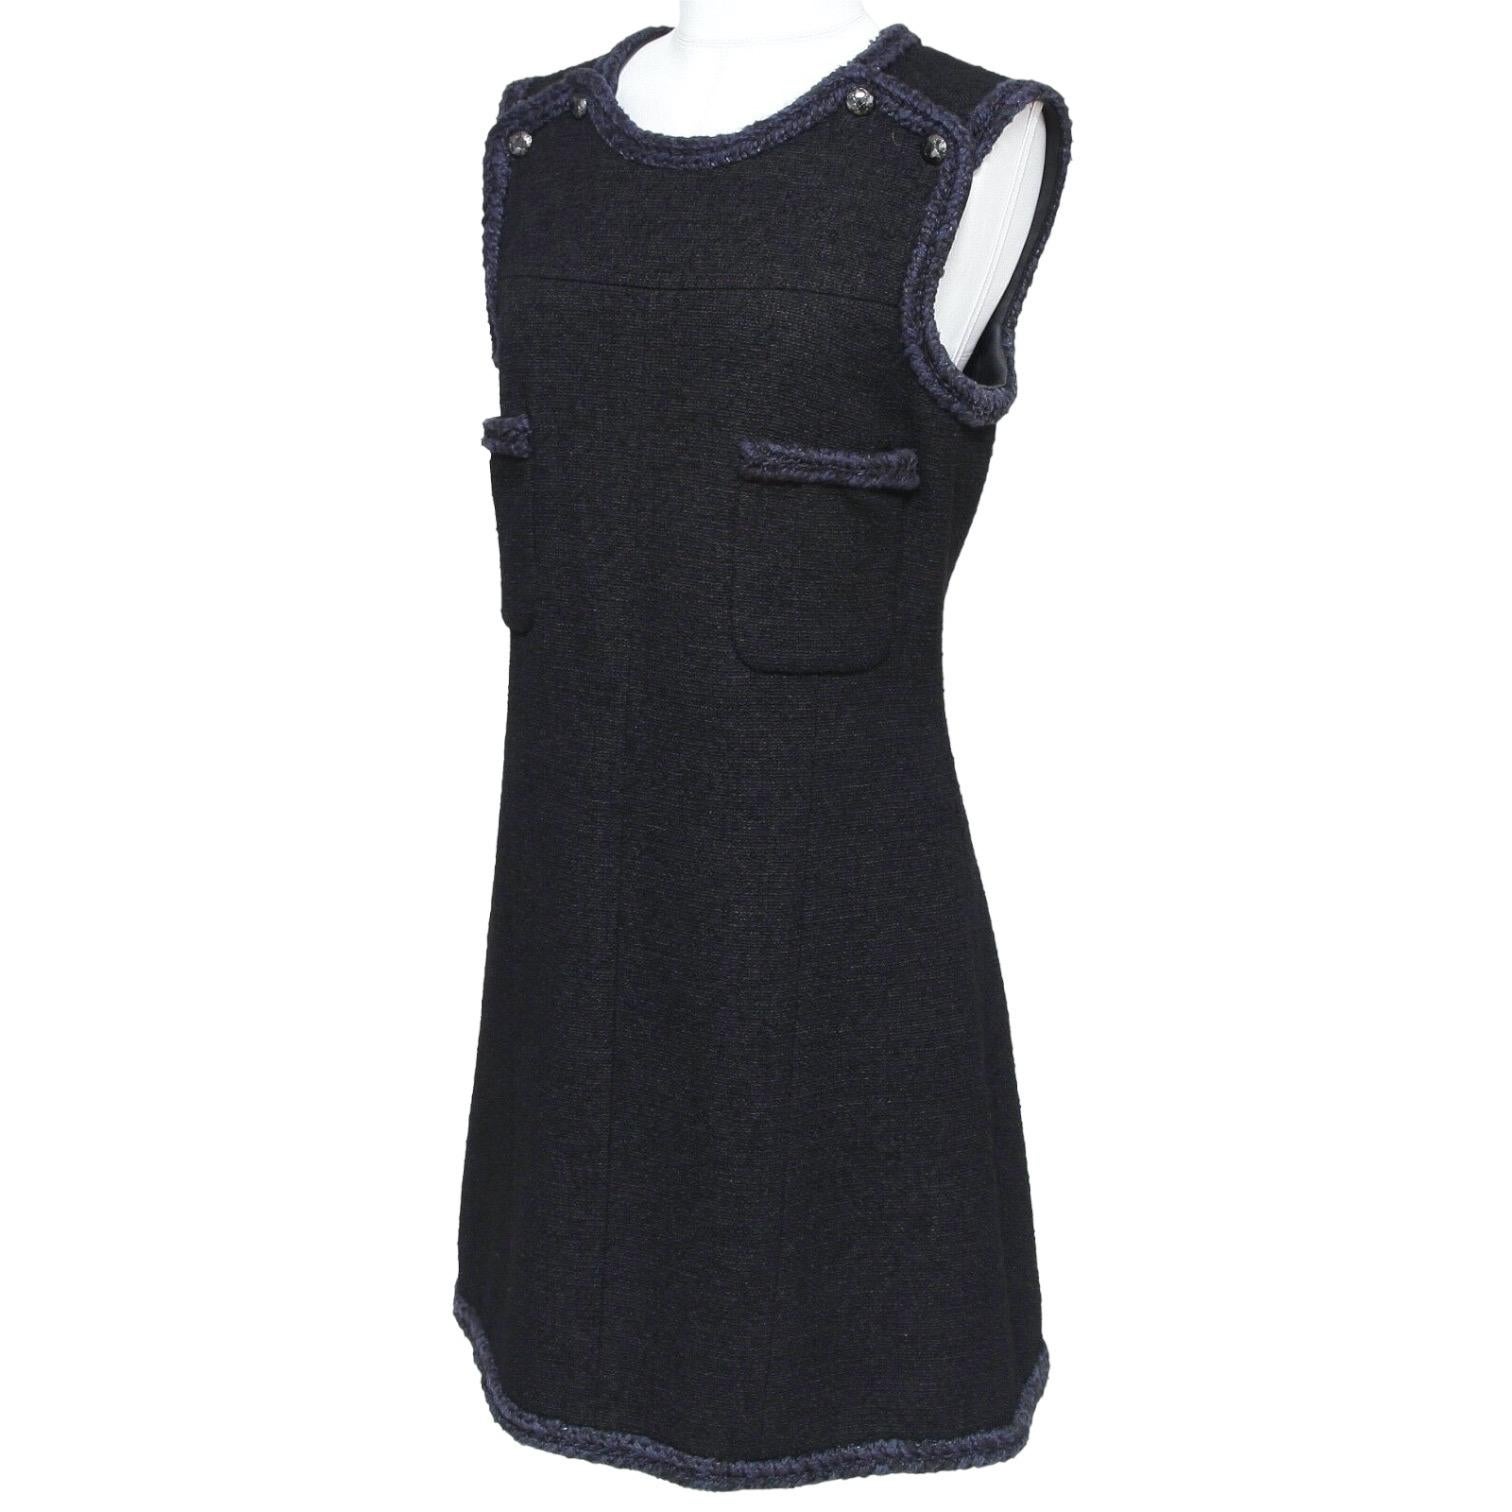 CHANEL Dress Tweed Black Navy Sleeveless Braided Trim Wool Silk Sz 42 2013 In Good Condition For Sale In Hollywood, FL